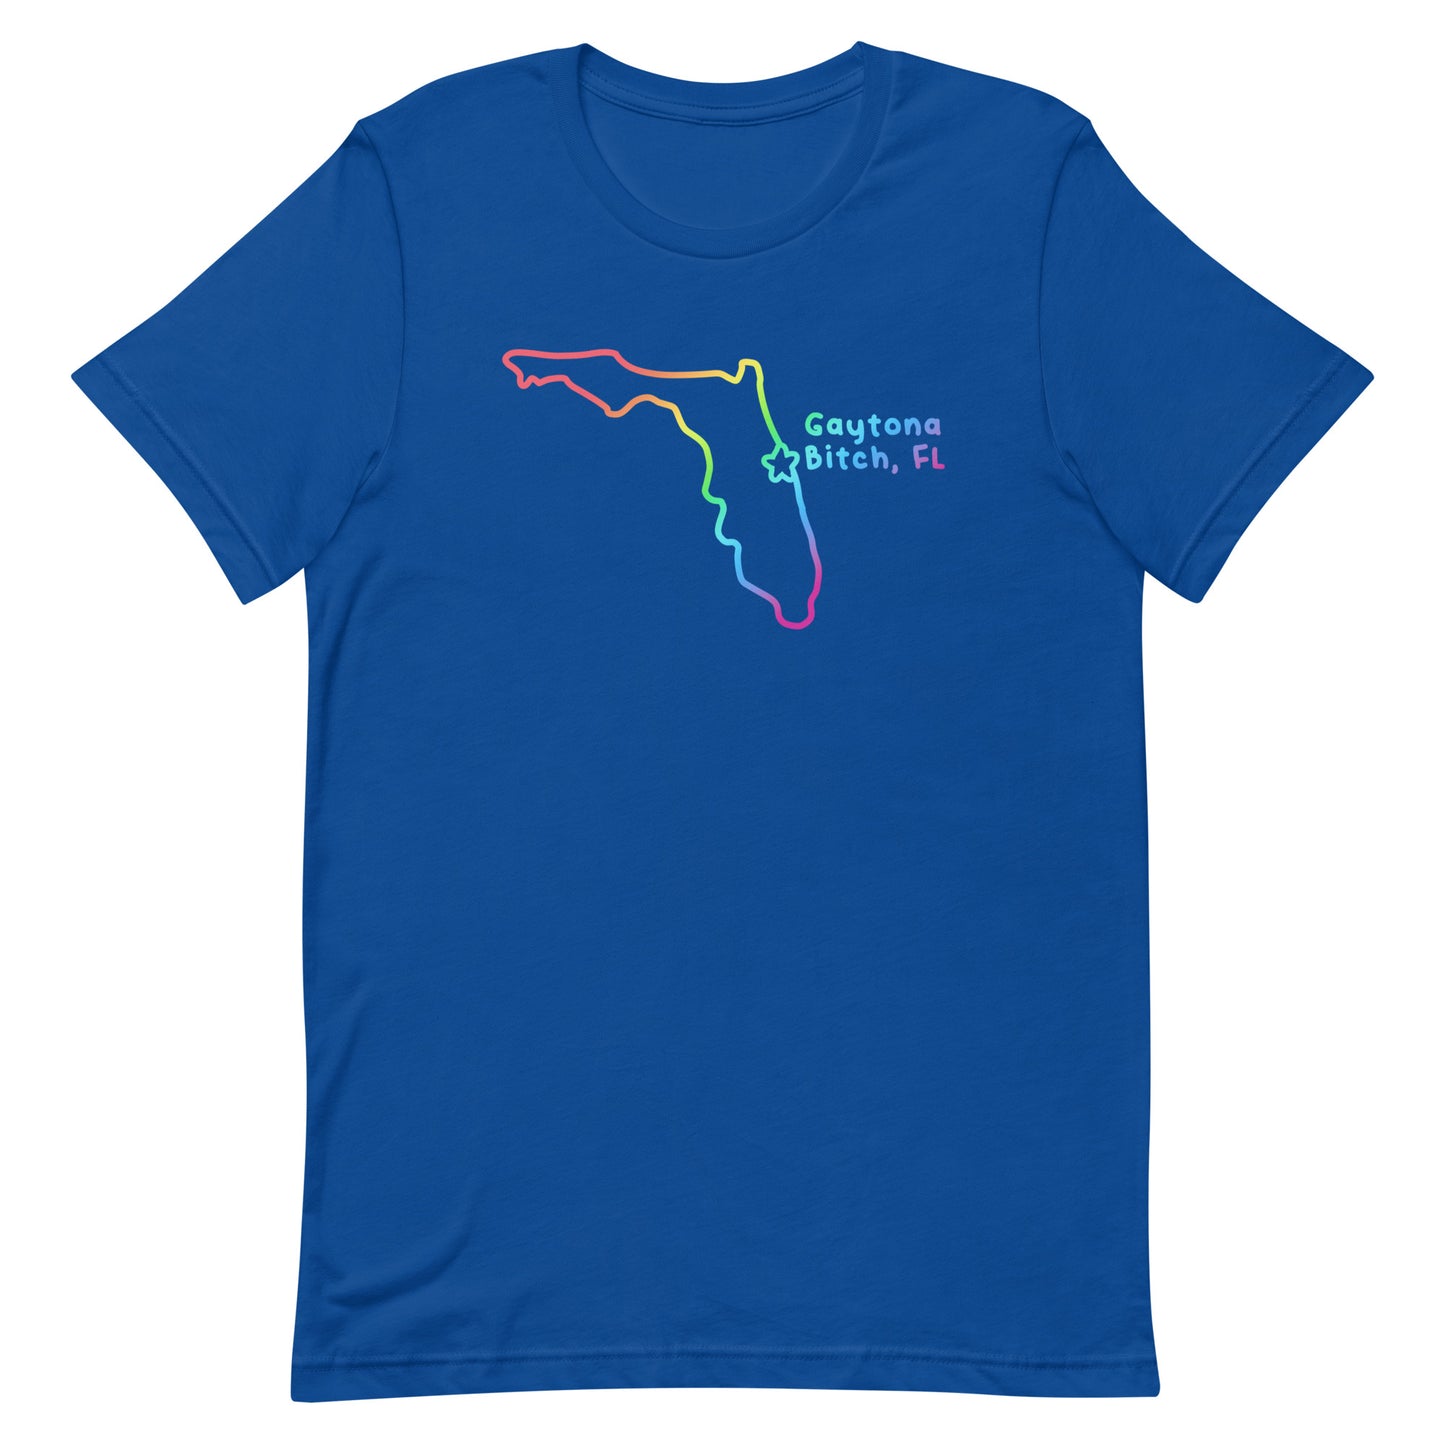 Gaytona Bitch, FL Unisex t-shirt